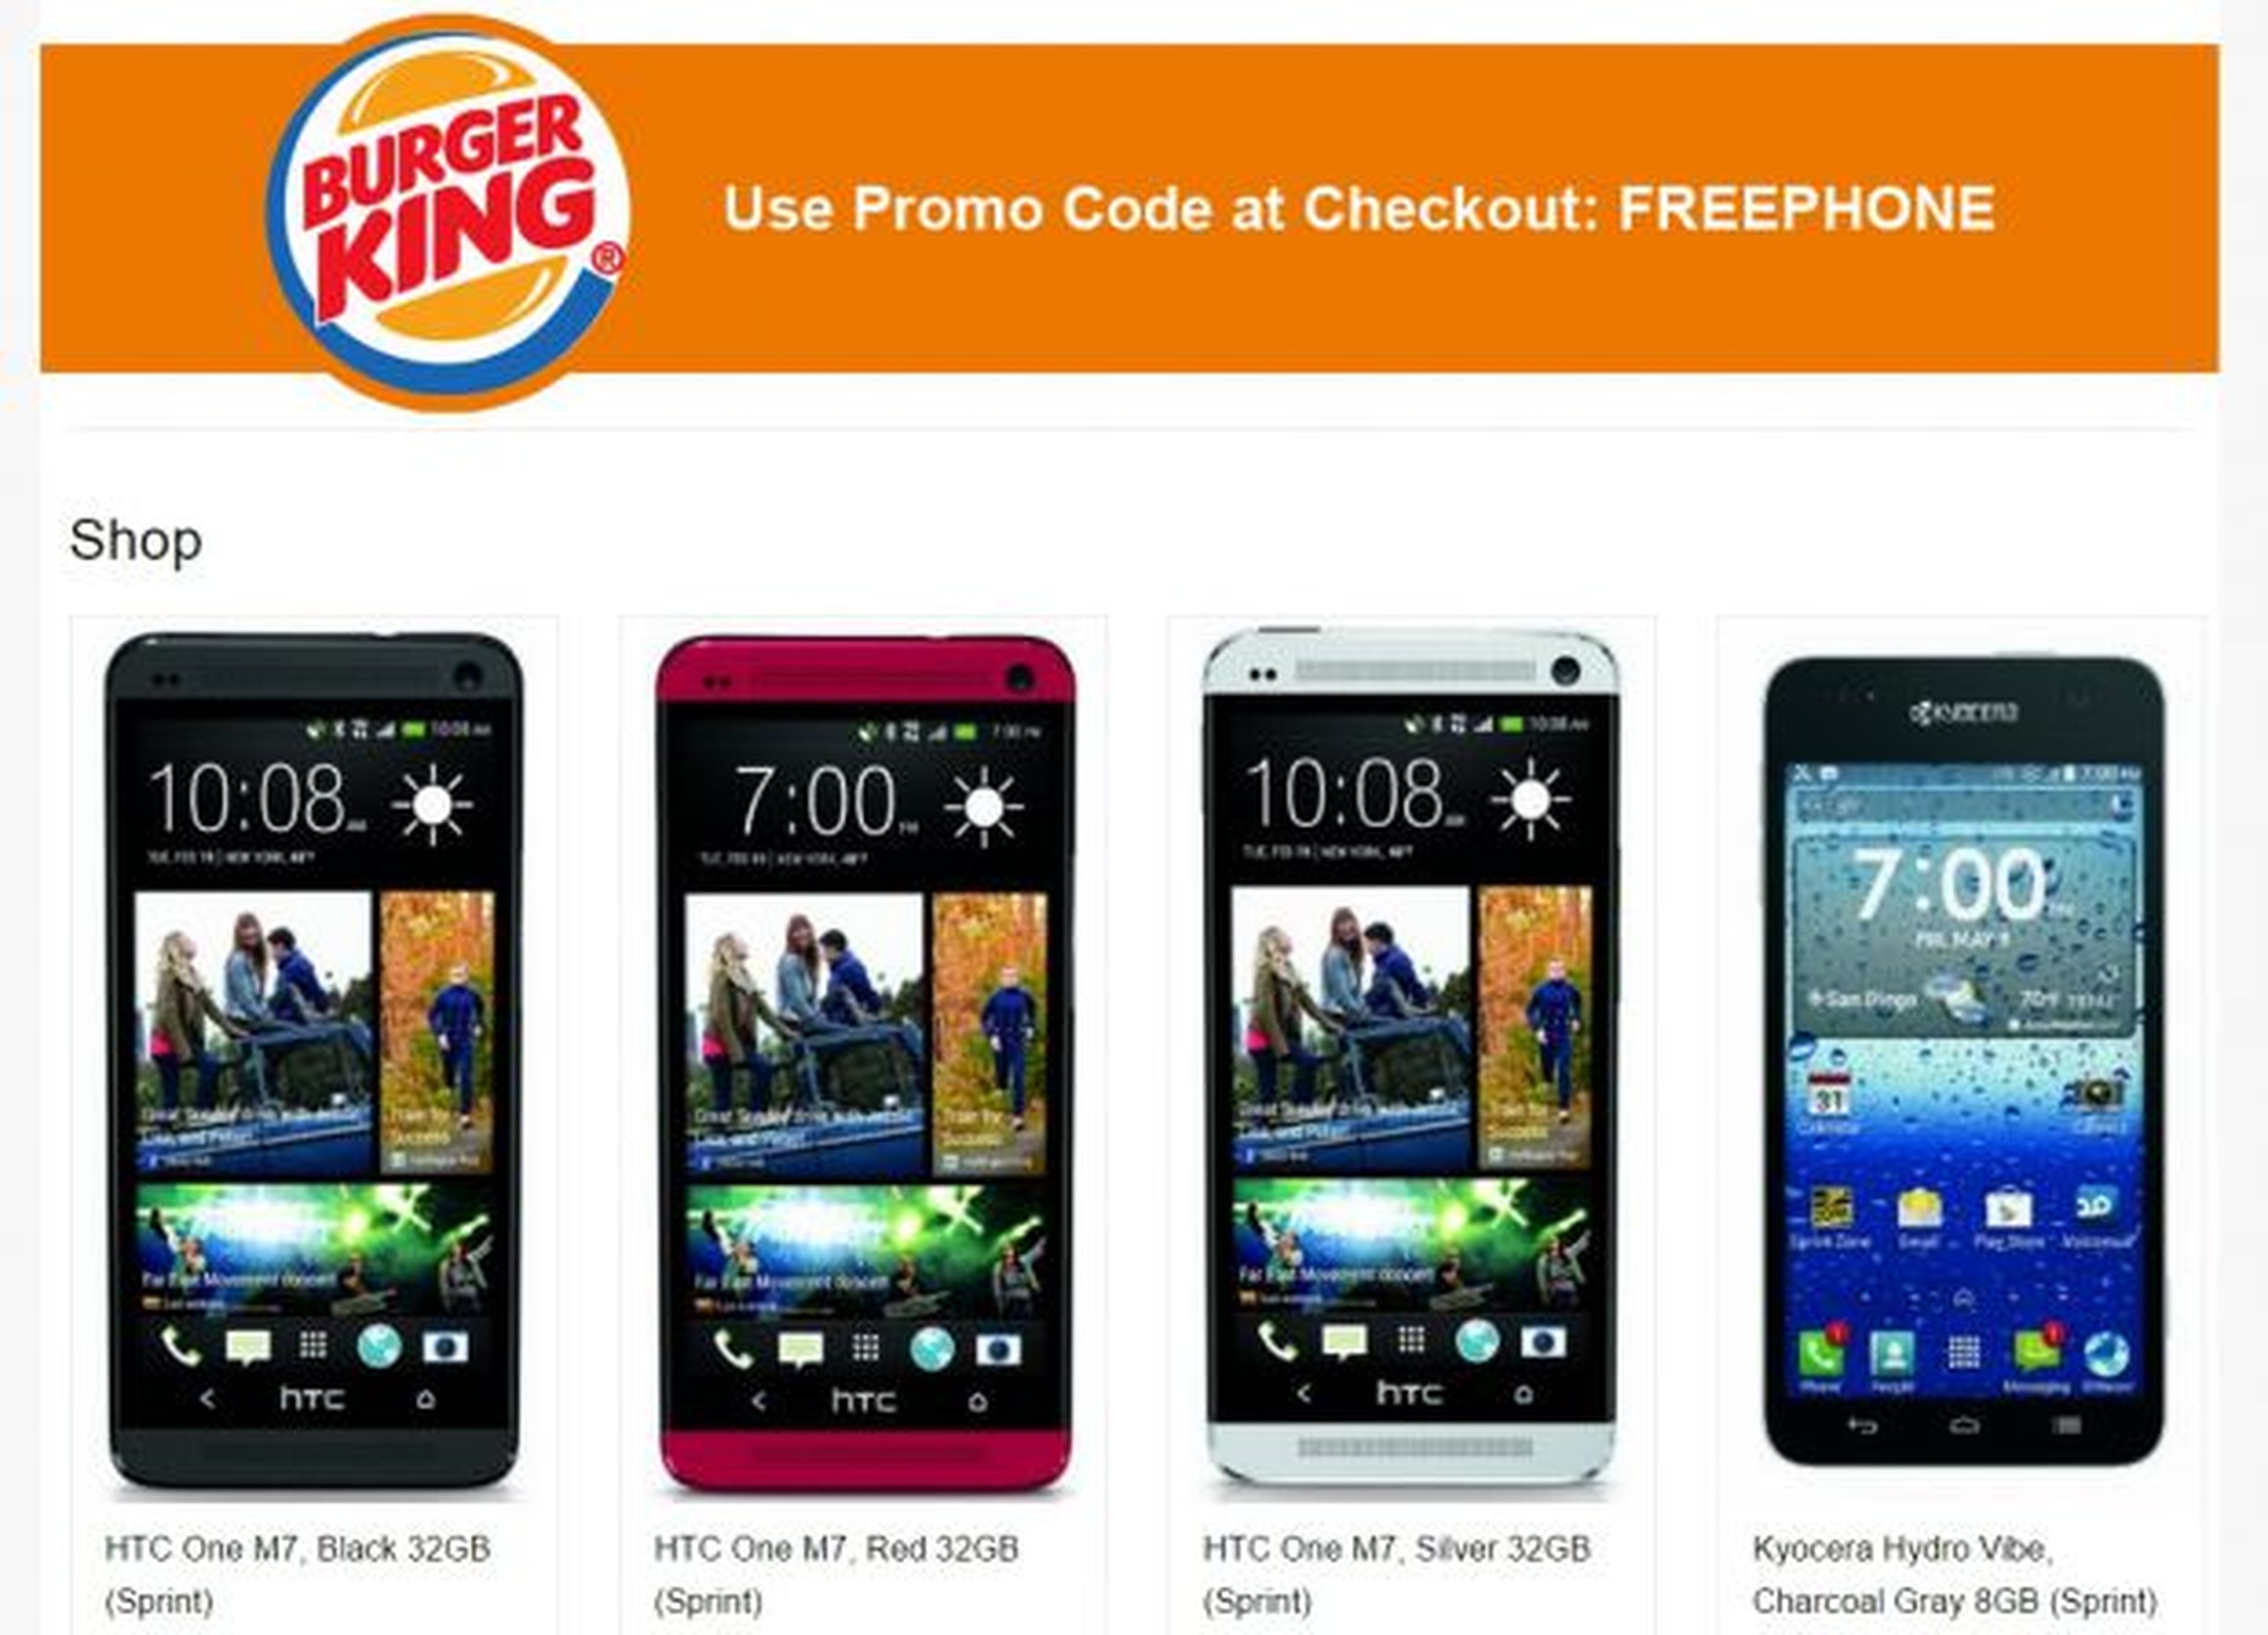 Promoción Burger King smartphone gratis